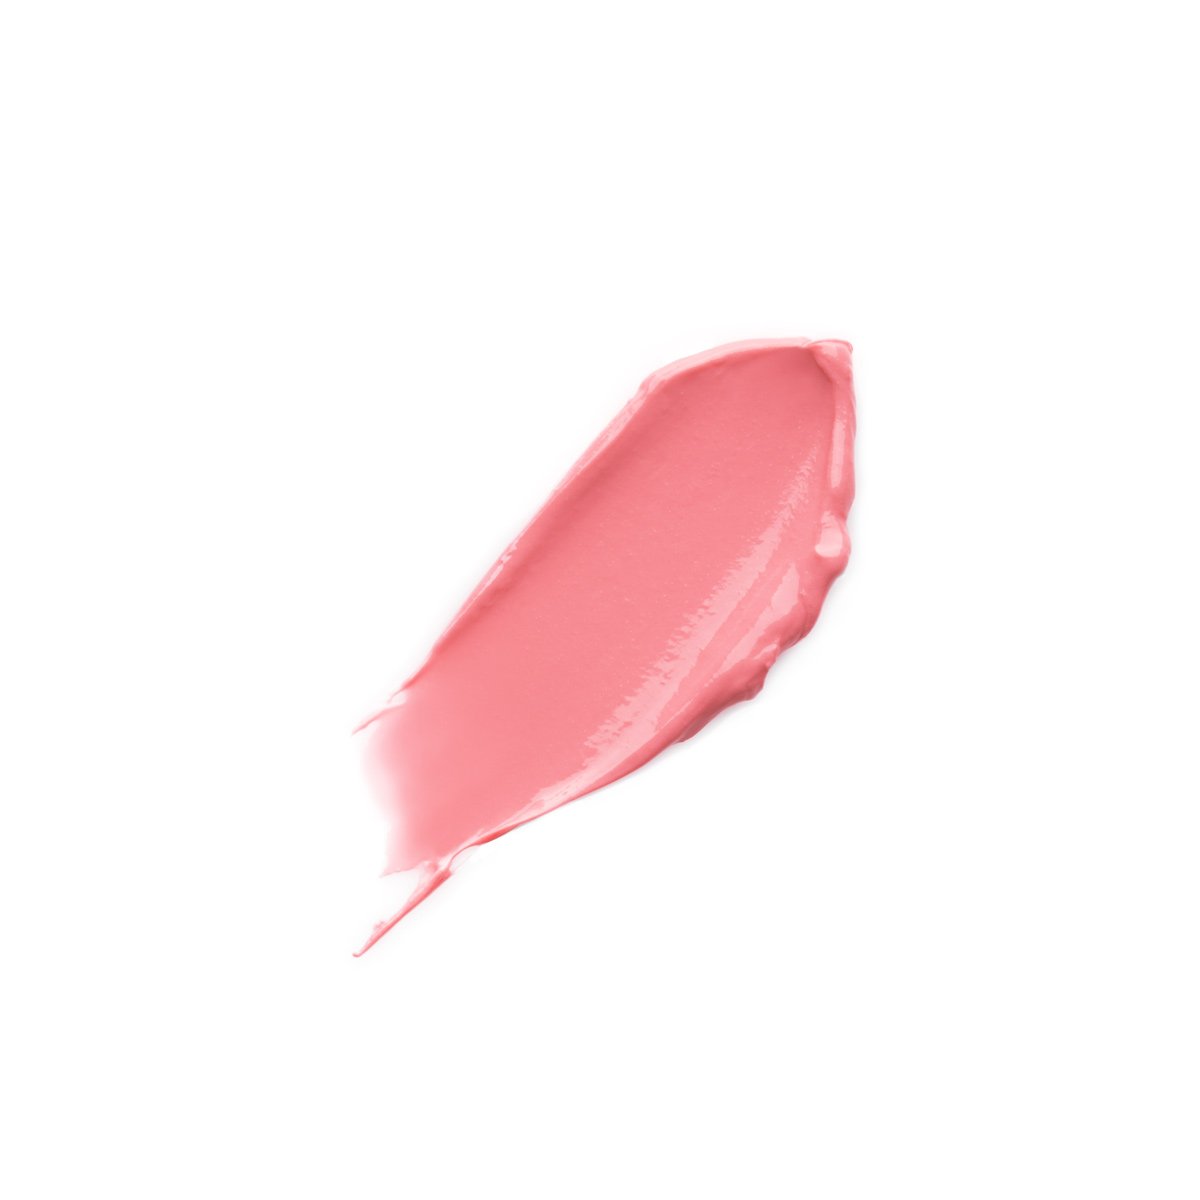 FEE SOIE - GLISTENING SUGARY PINK - glistening sugary pink lipstick lip balm 